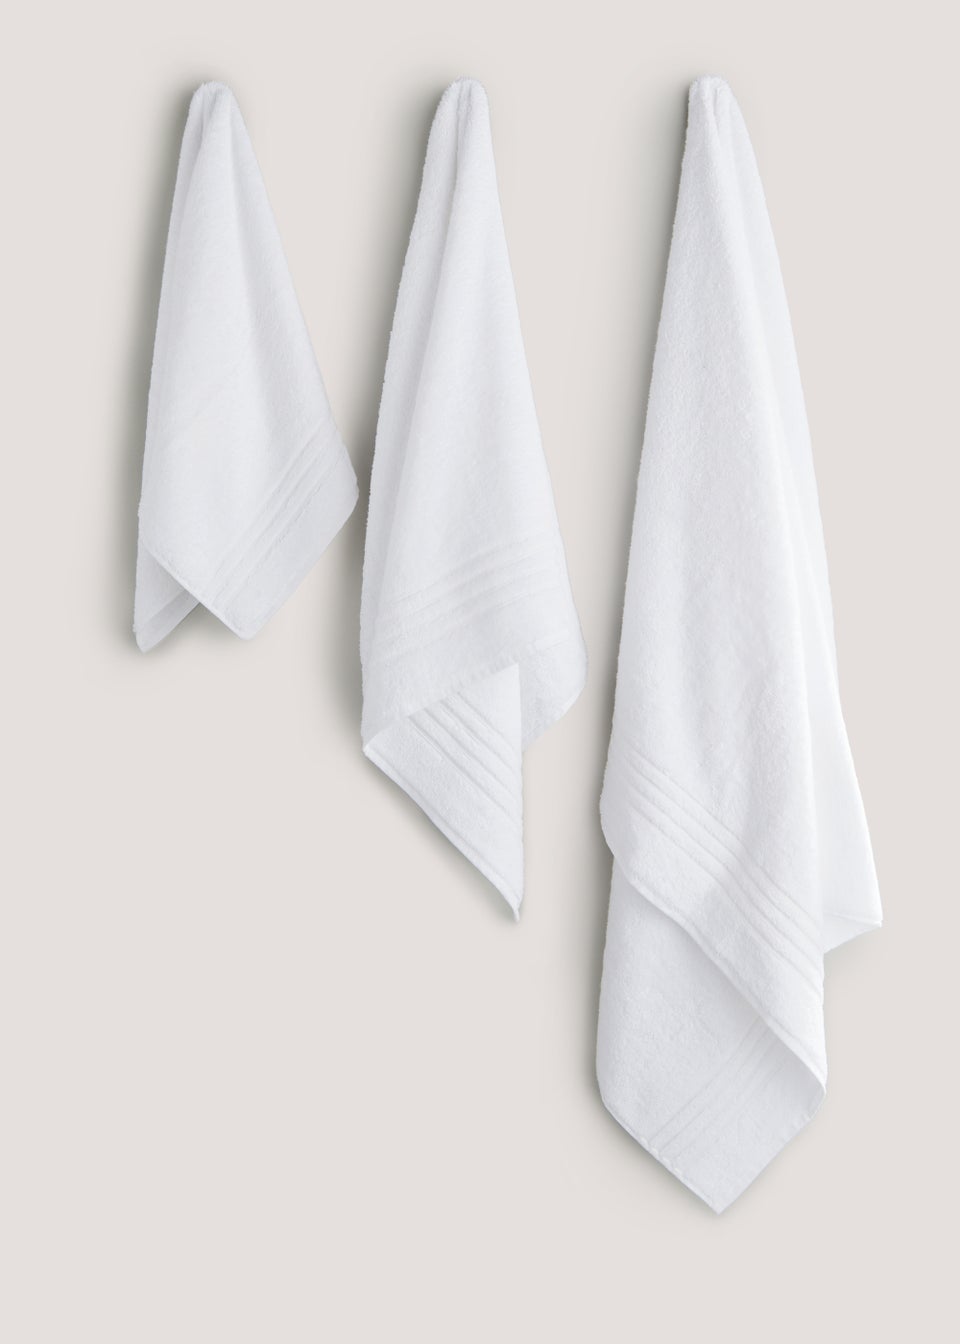 White 100% Egyptian Cotton Towels